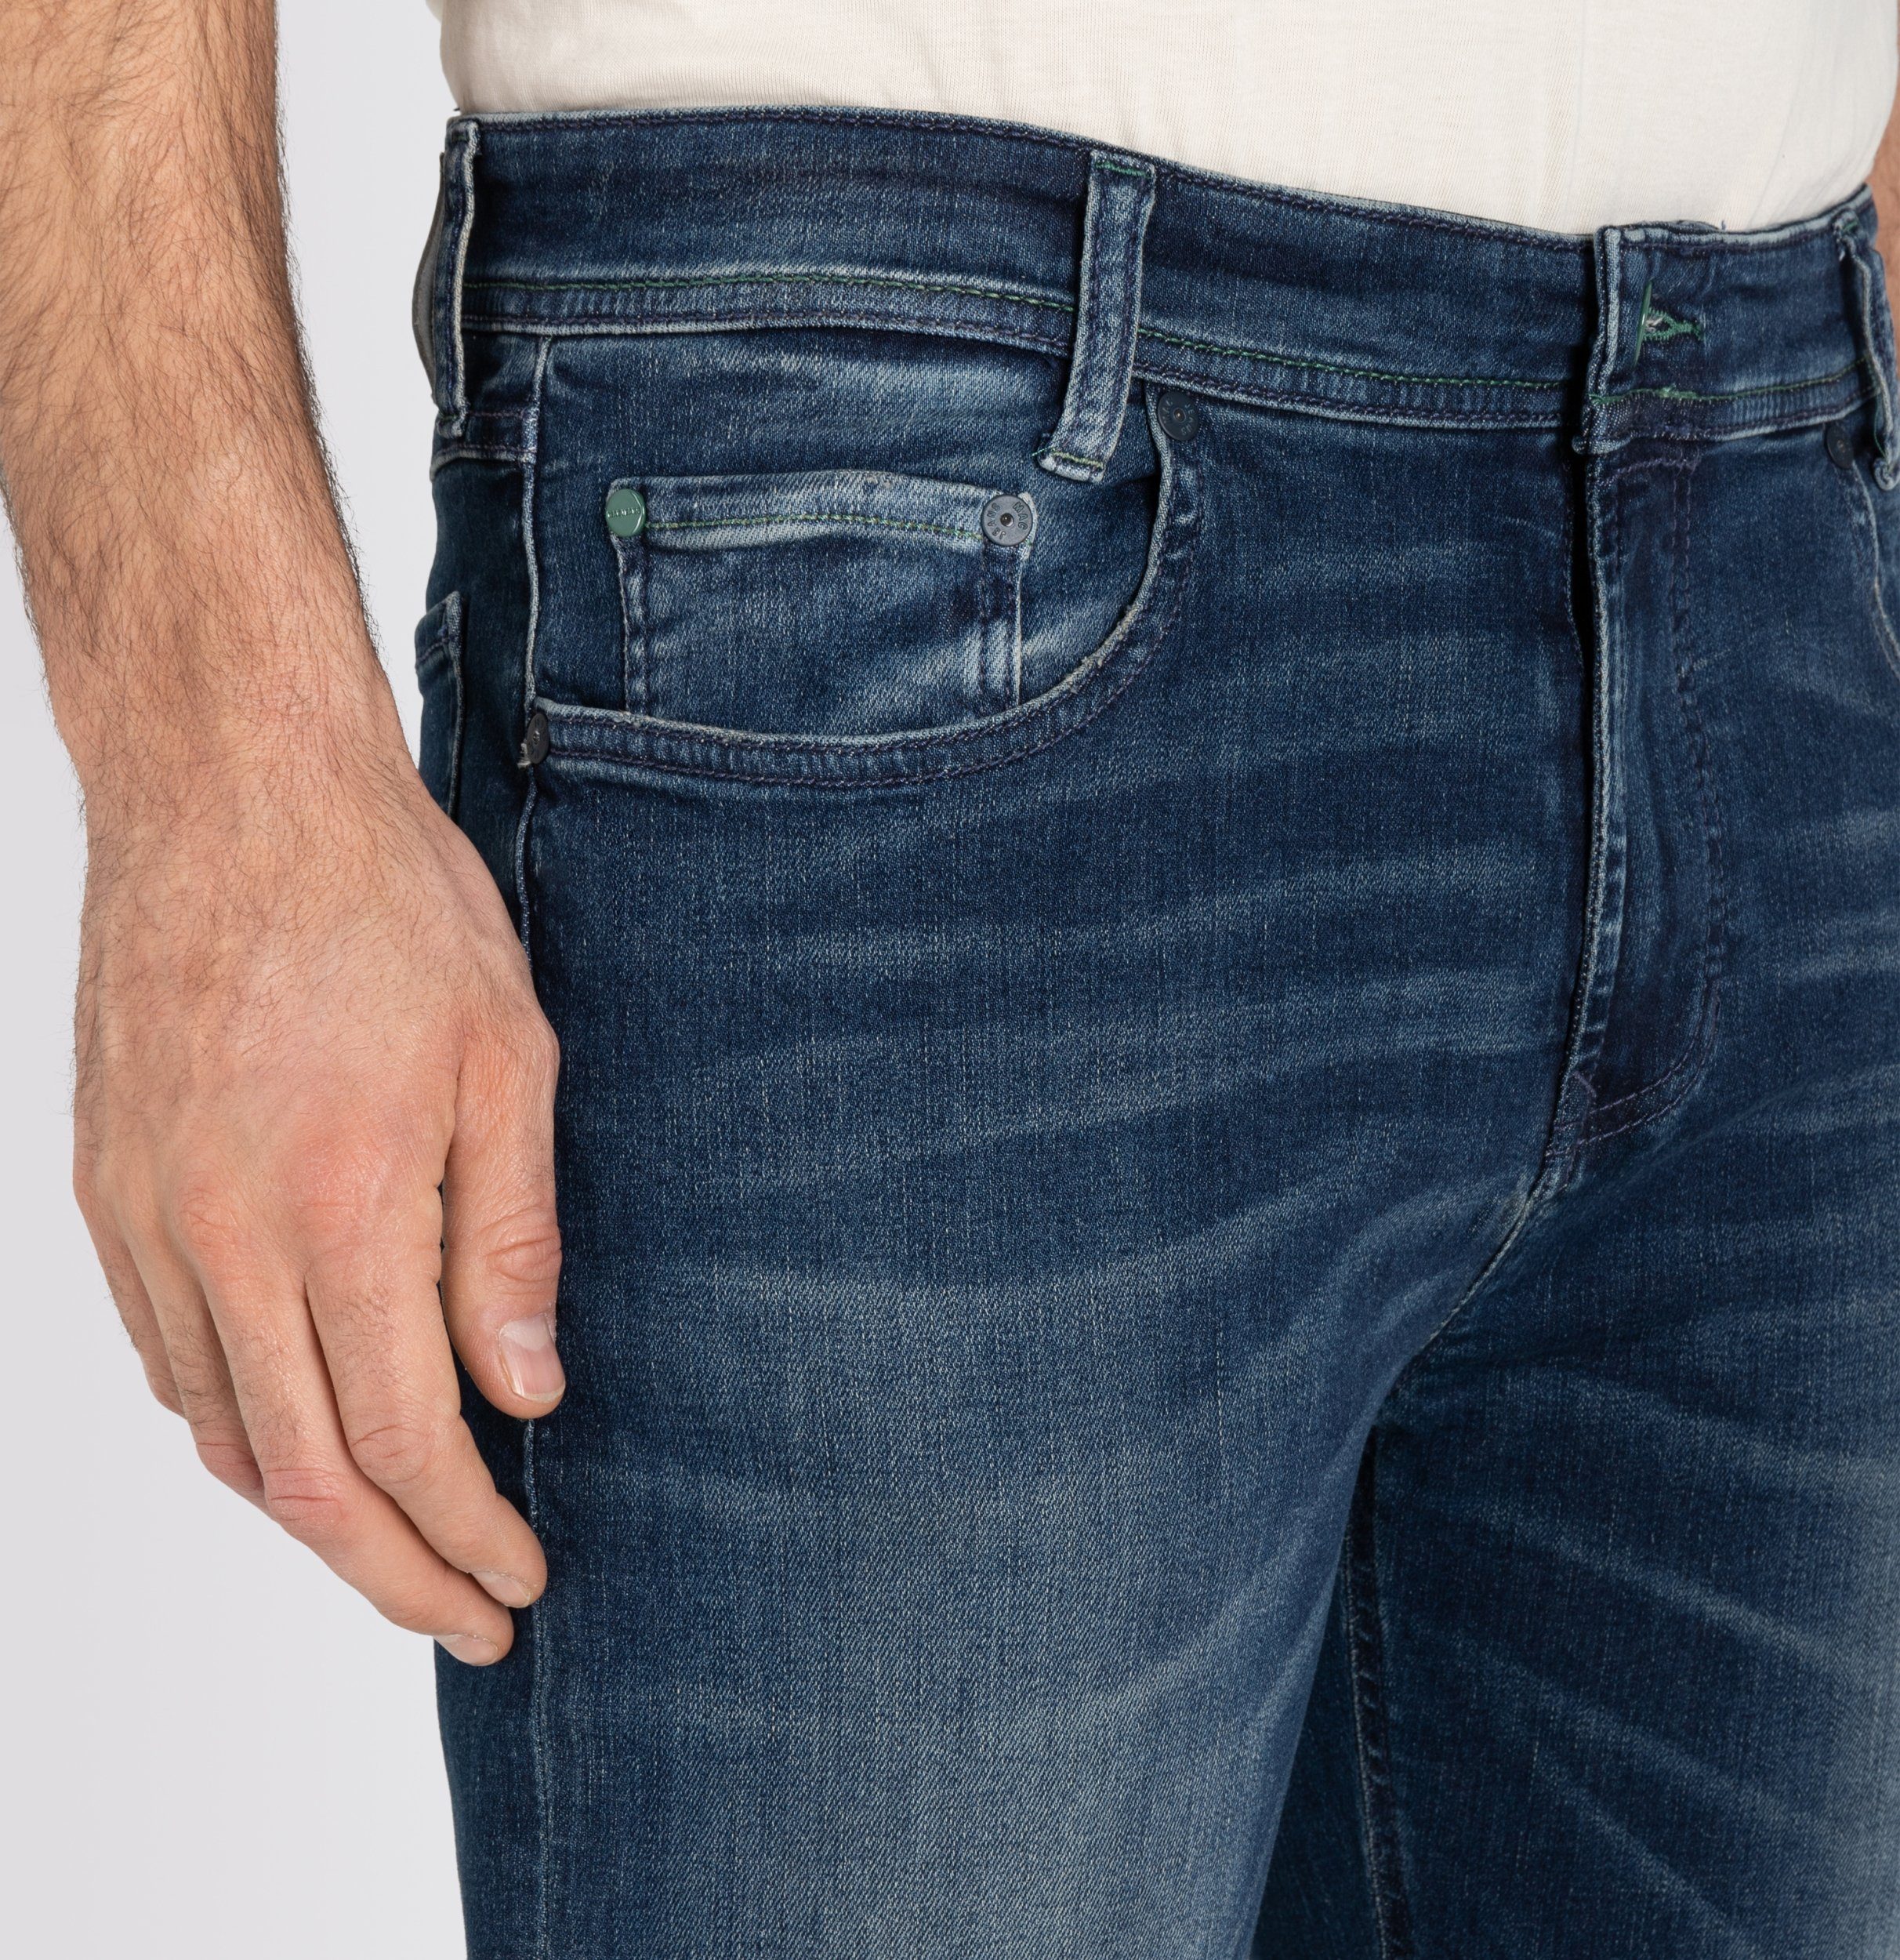 authentic 5-Pocket-Jeans MAC used MacFlexx blue dark